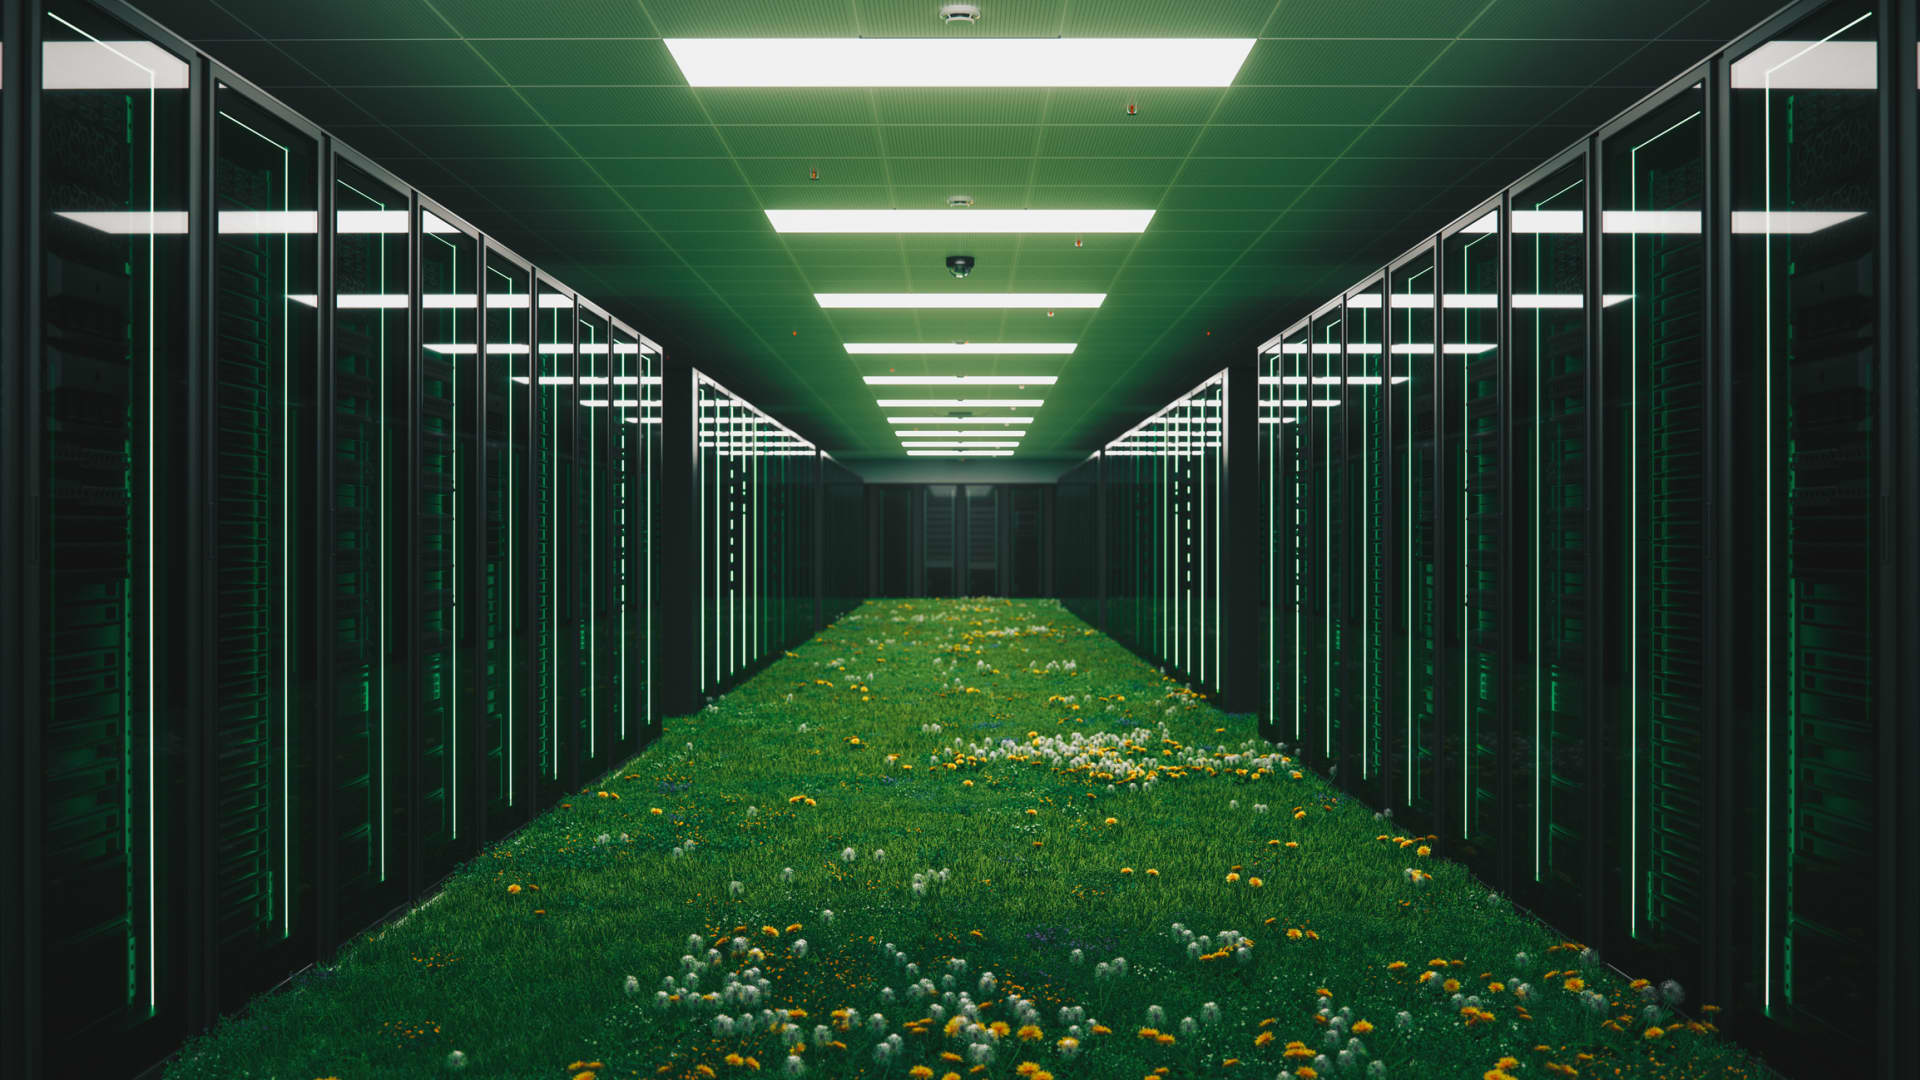 Conceptual image of green server room